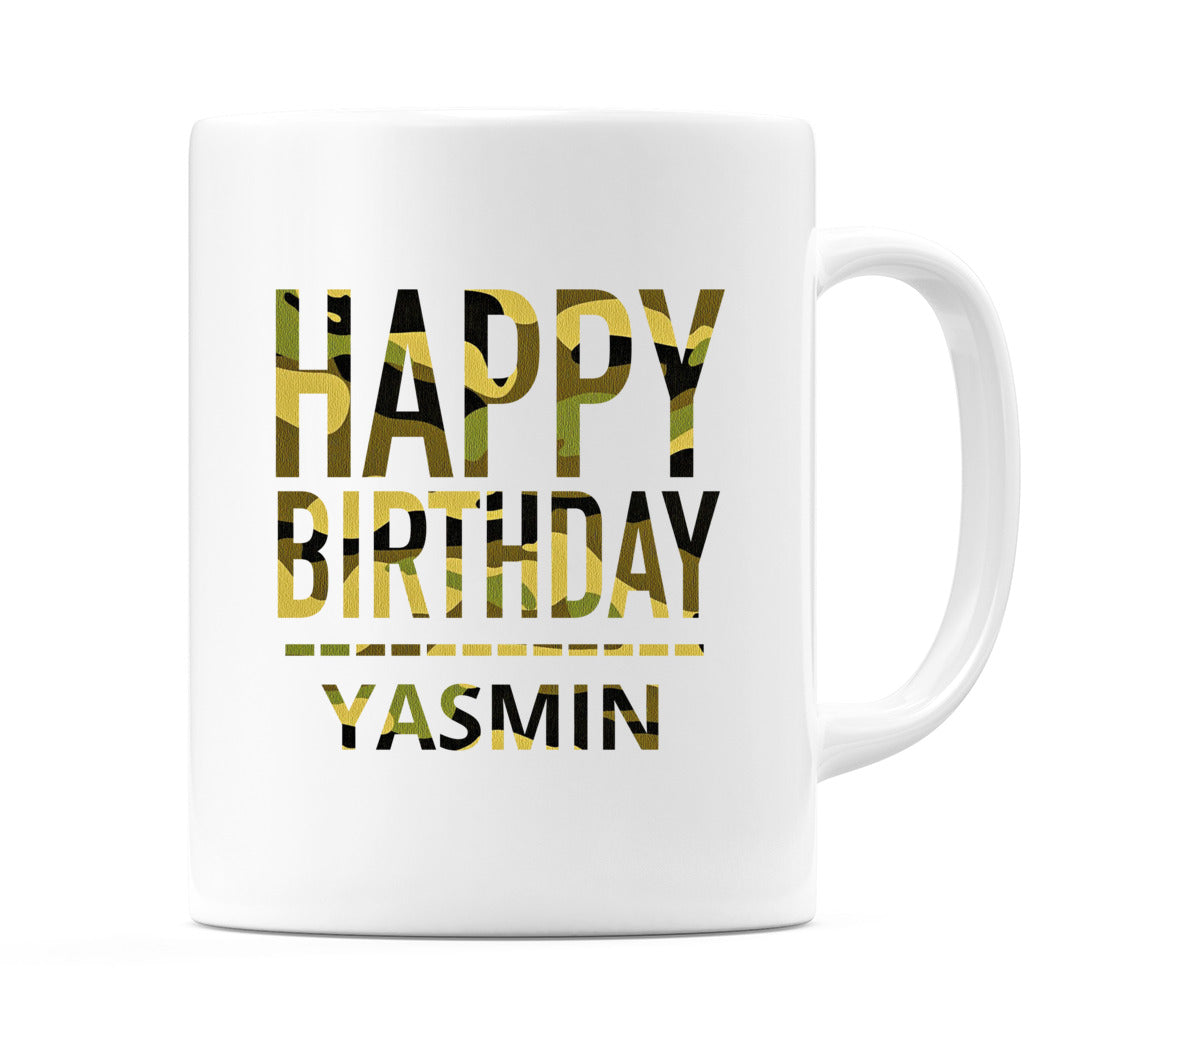 Happy Birthday Yasmin (Camo) Mug Cup by WeDoMugs